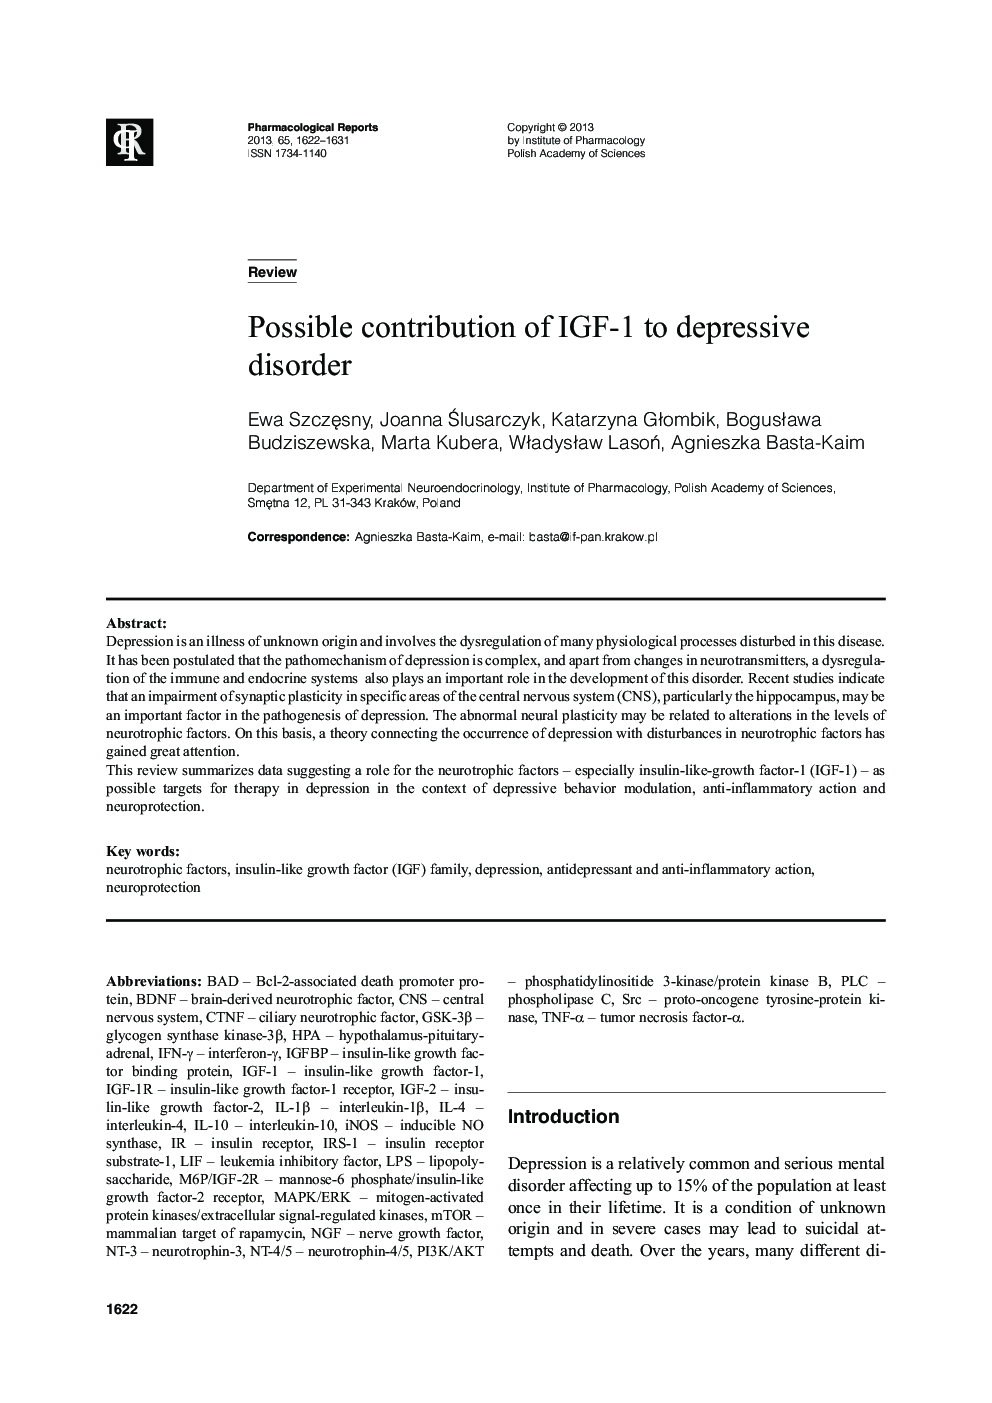 Possible contribution of IGF-1 to depressive disorder